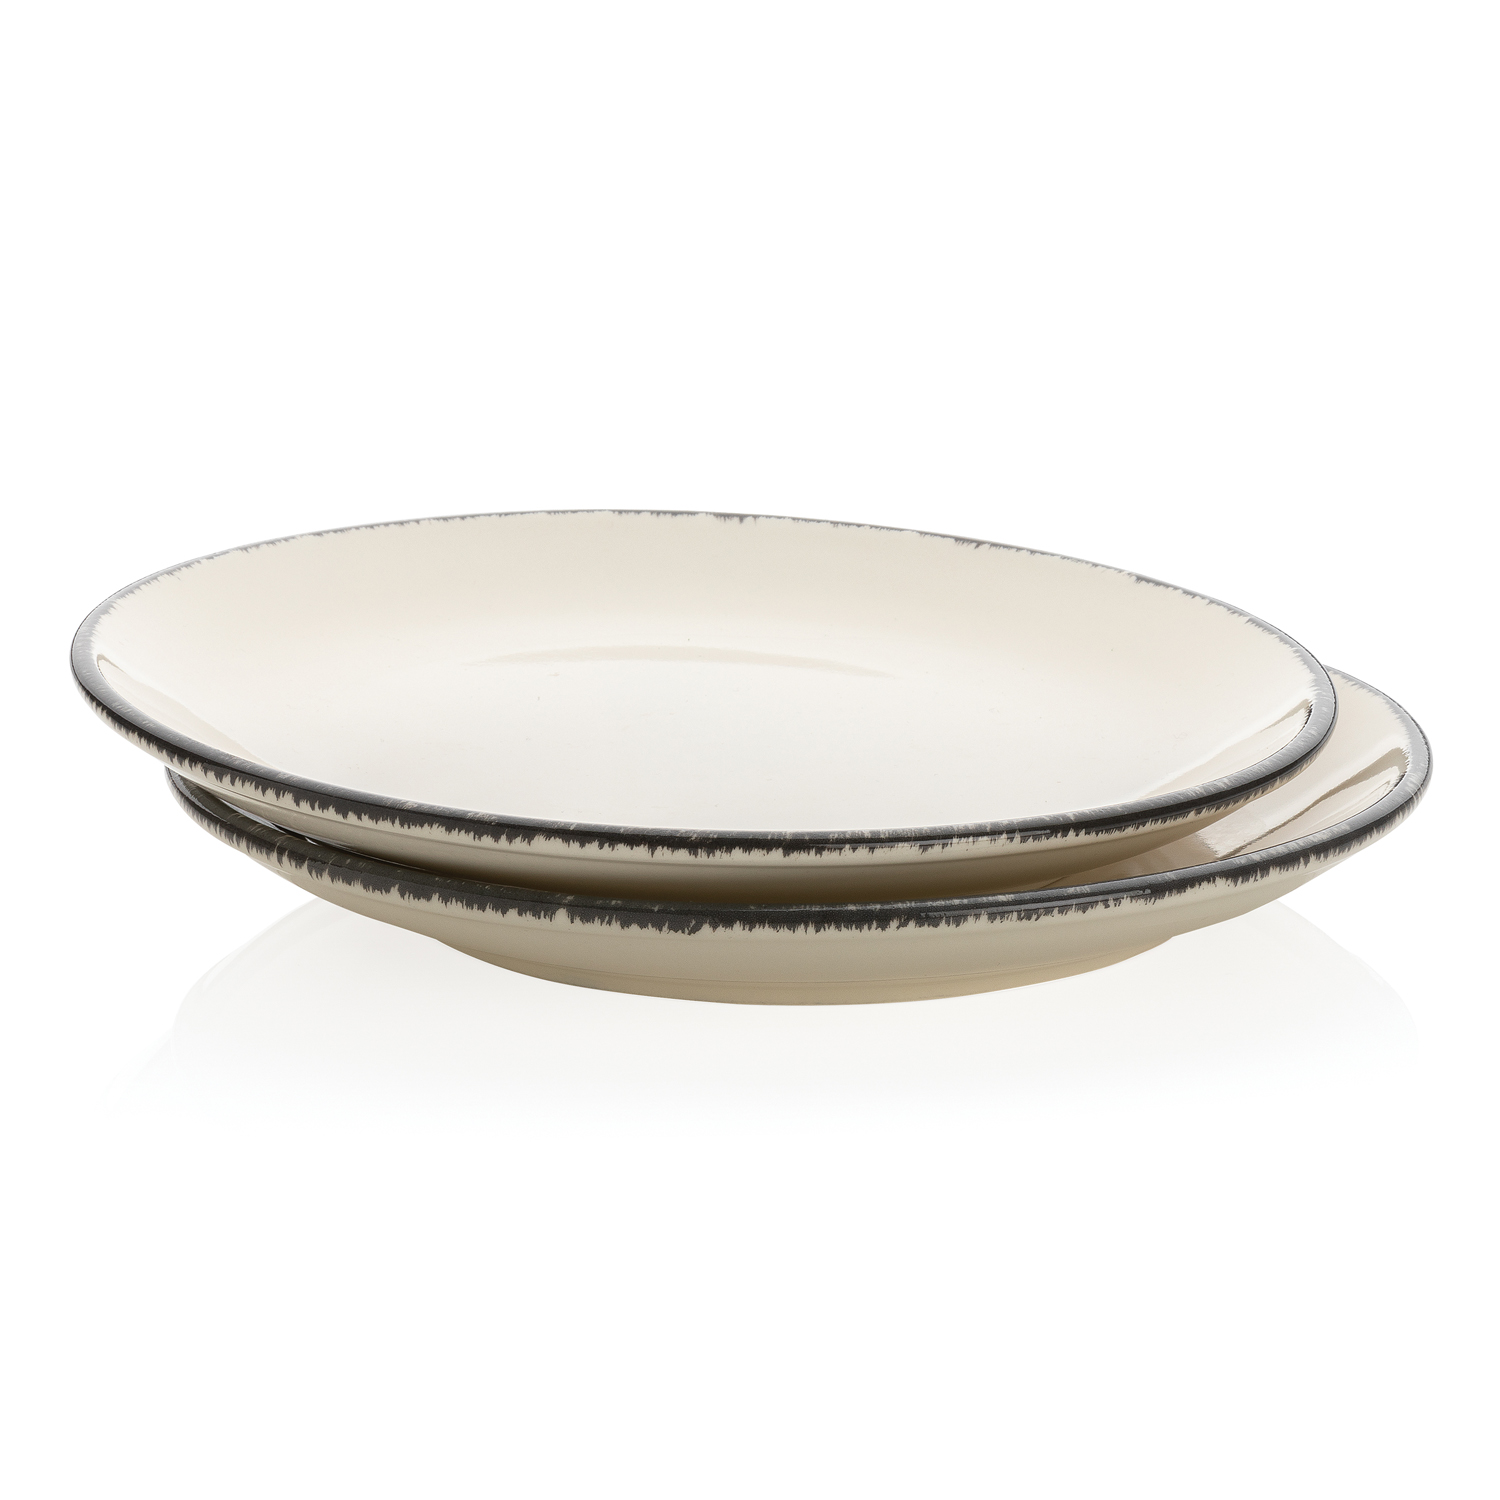 Артикул: XP263.081 — Набор керамических тарелок Ukiyo, 2 предмета